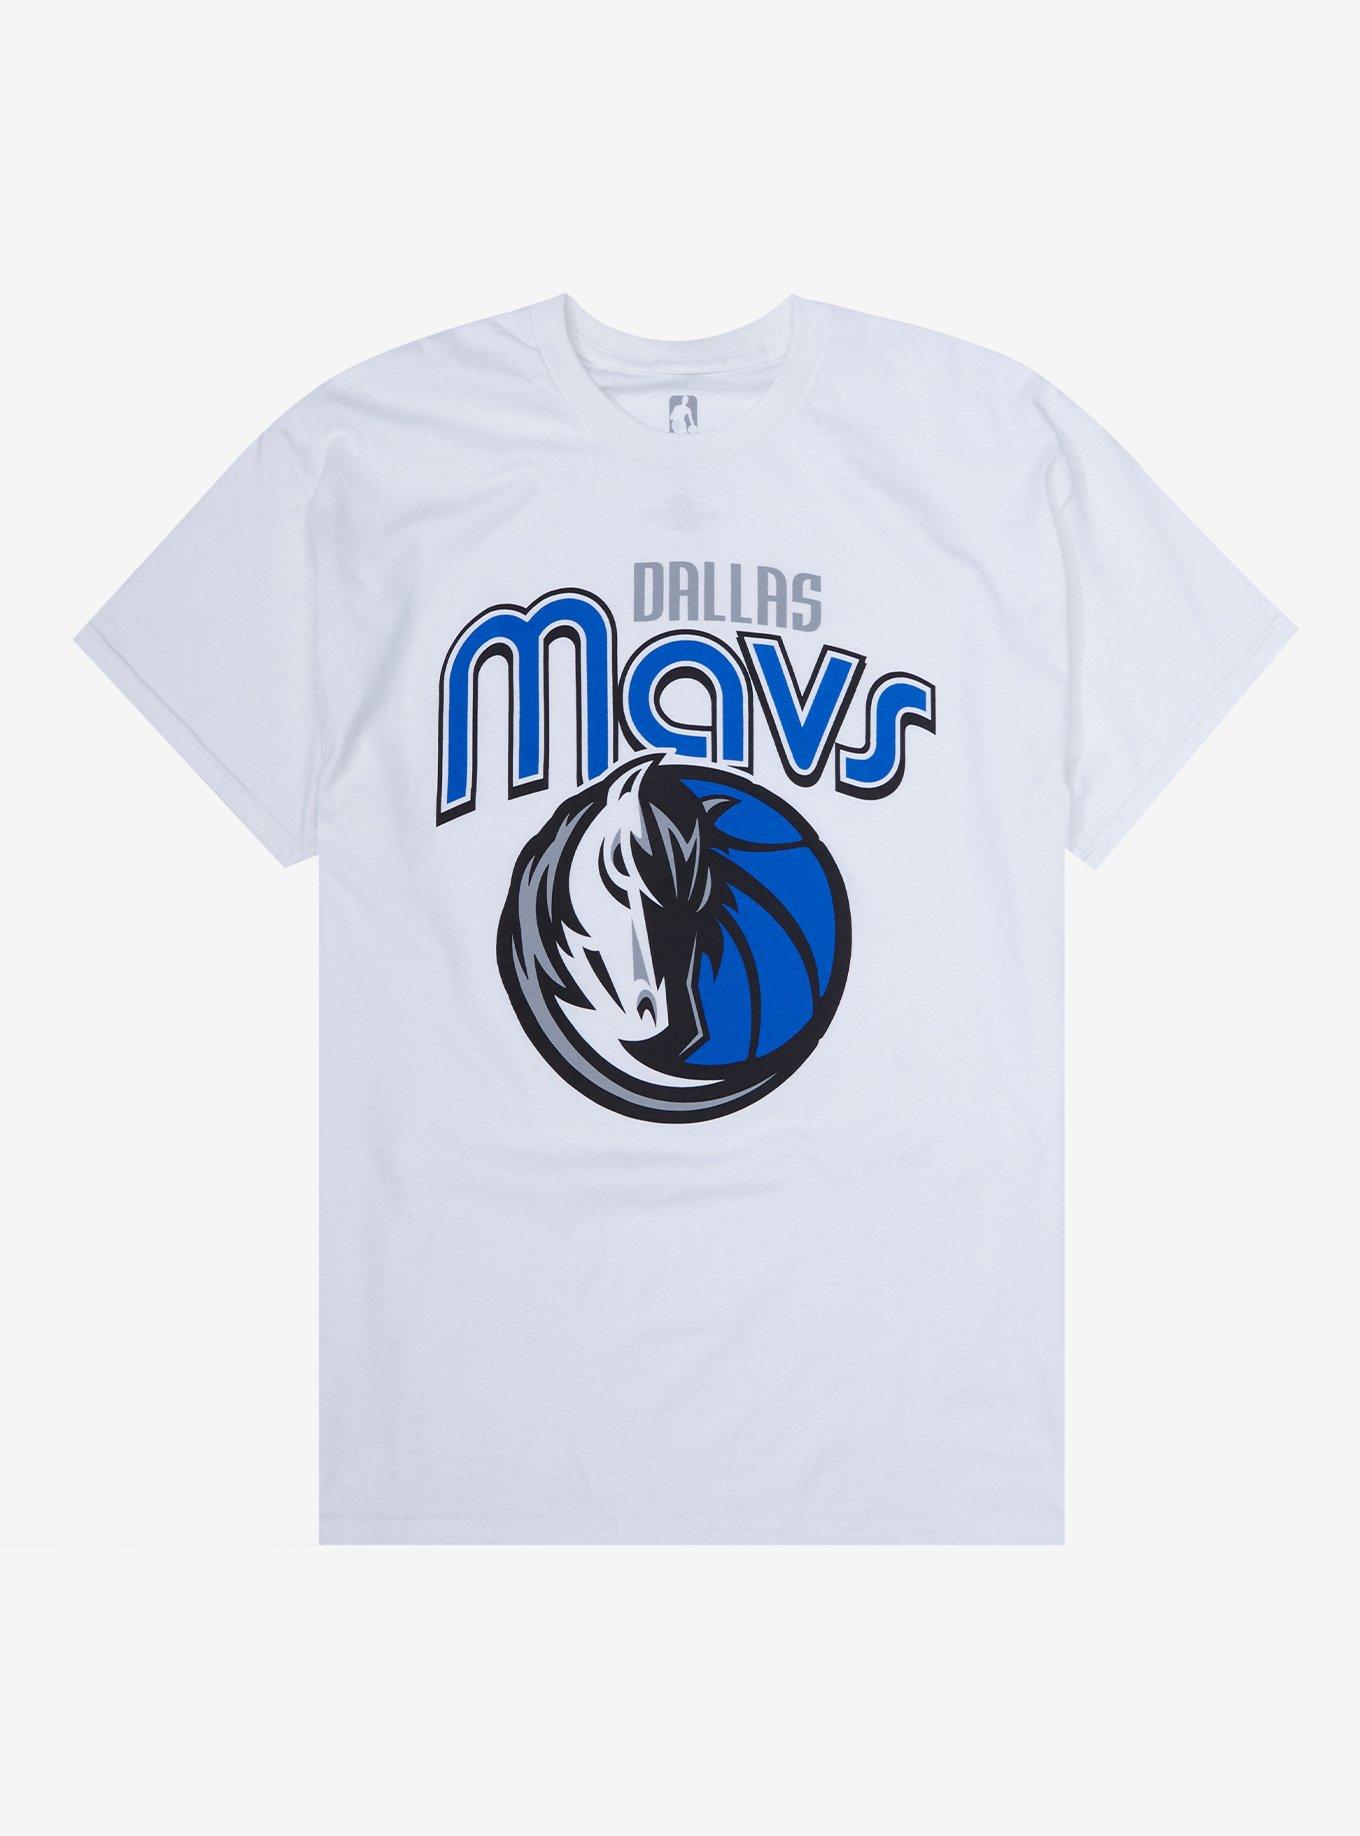 Dallas Mavericks, Shirts